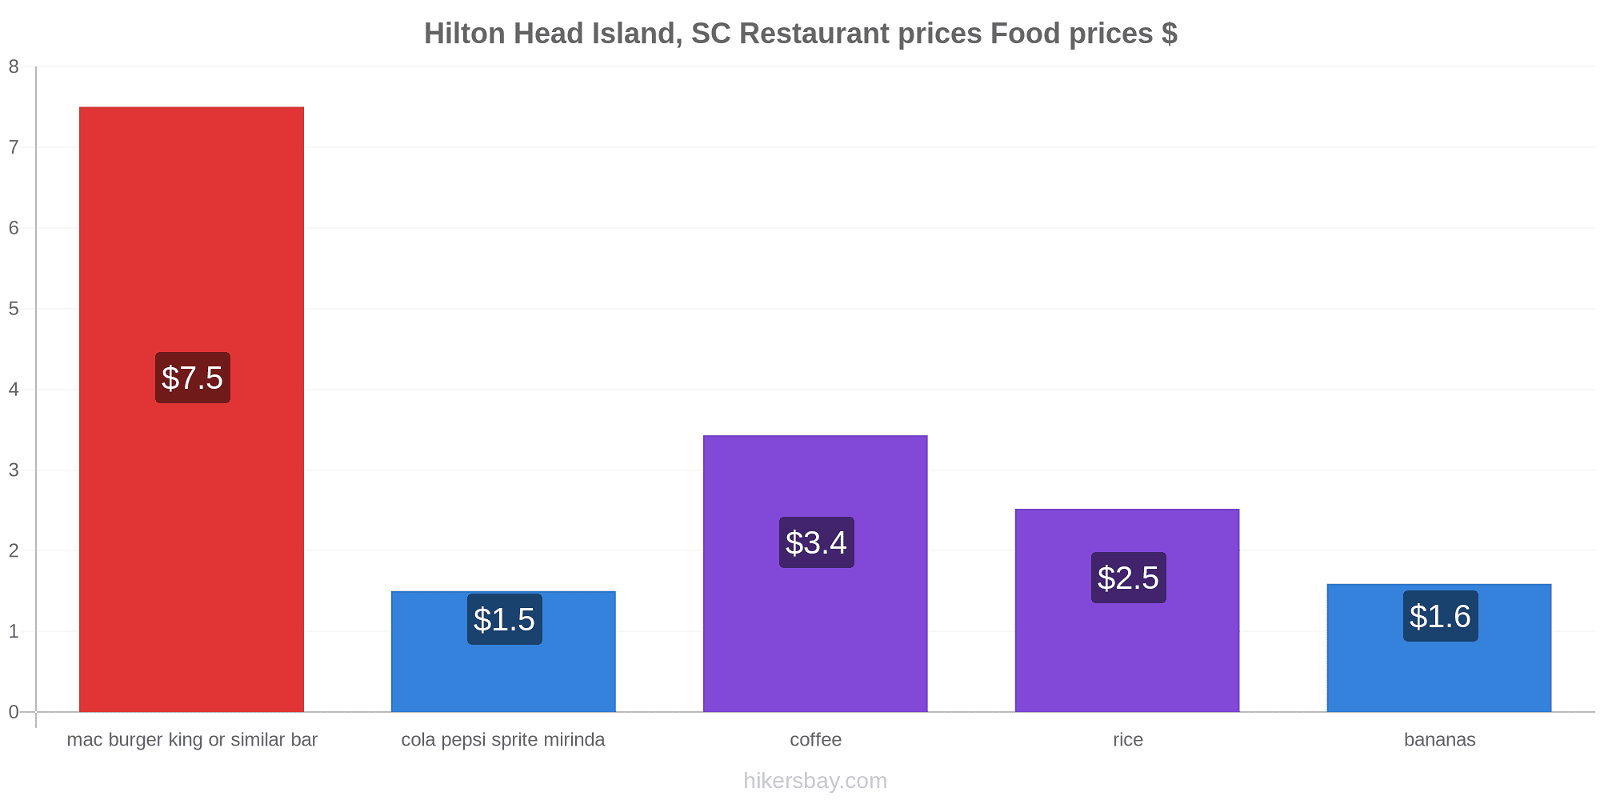 Hilton Head Island, SC price changes hikersbay.com